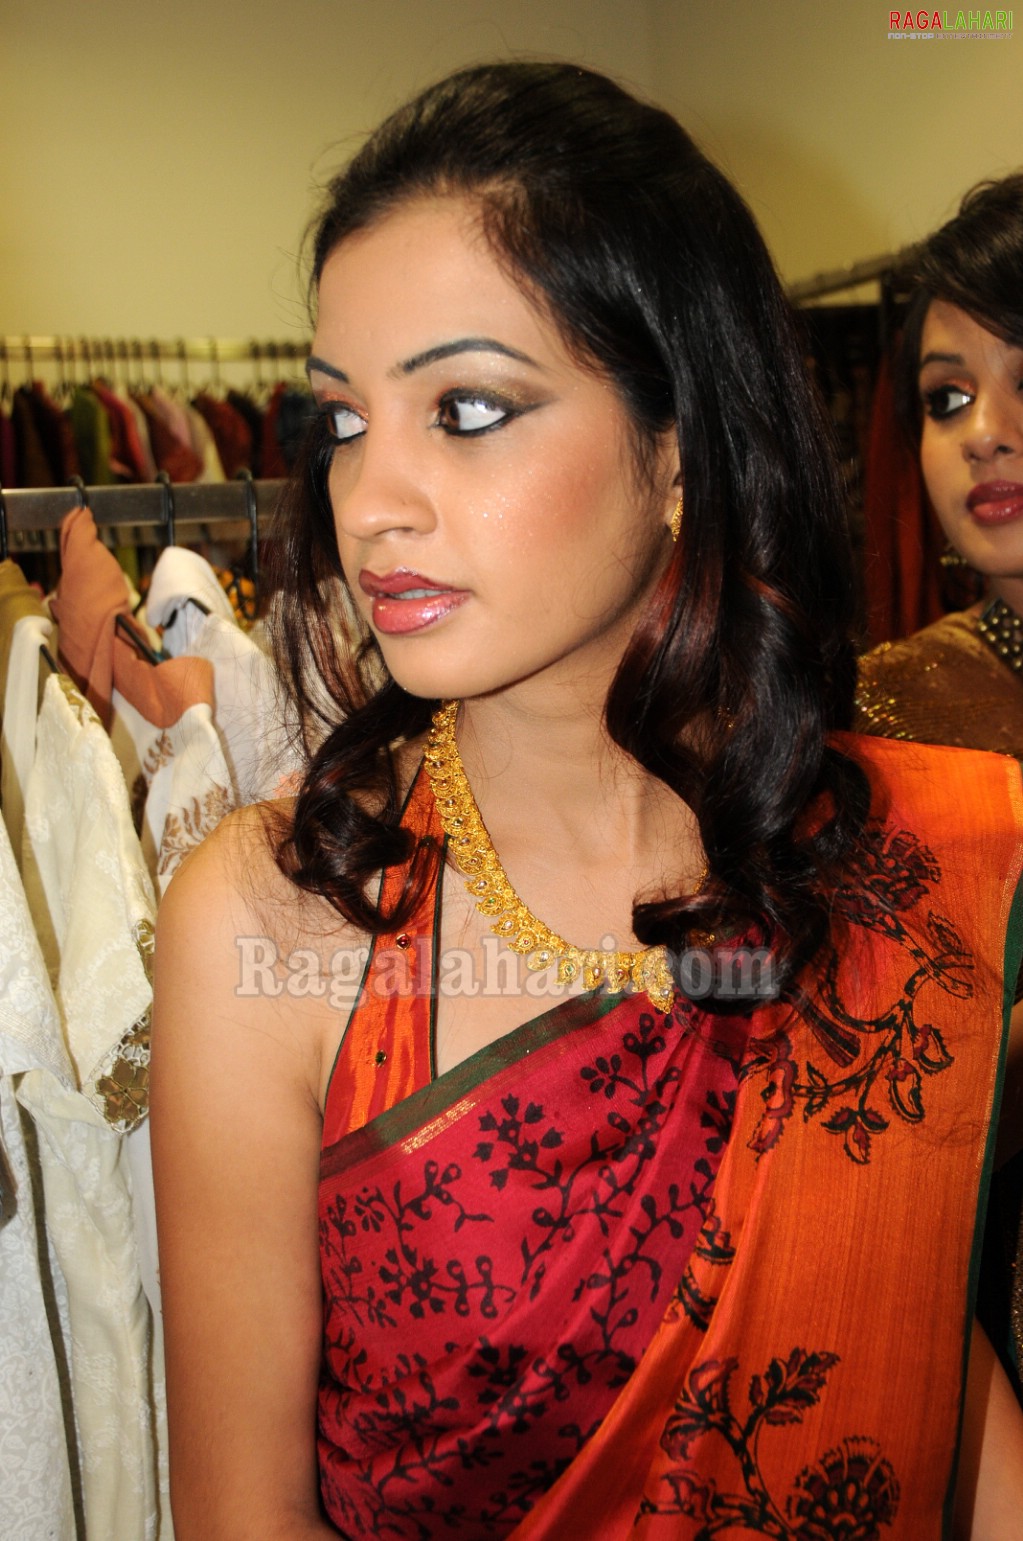 Models Display Akshaya Thrithiya Collections at Sakhi Fashions